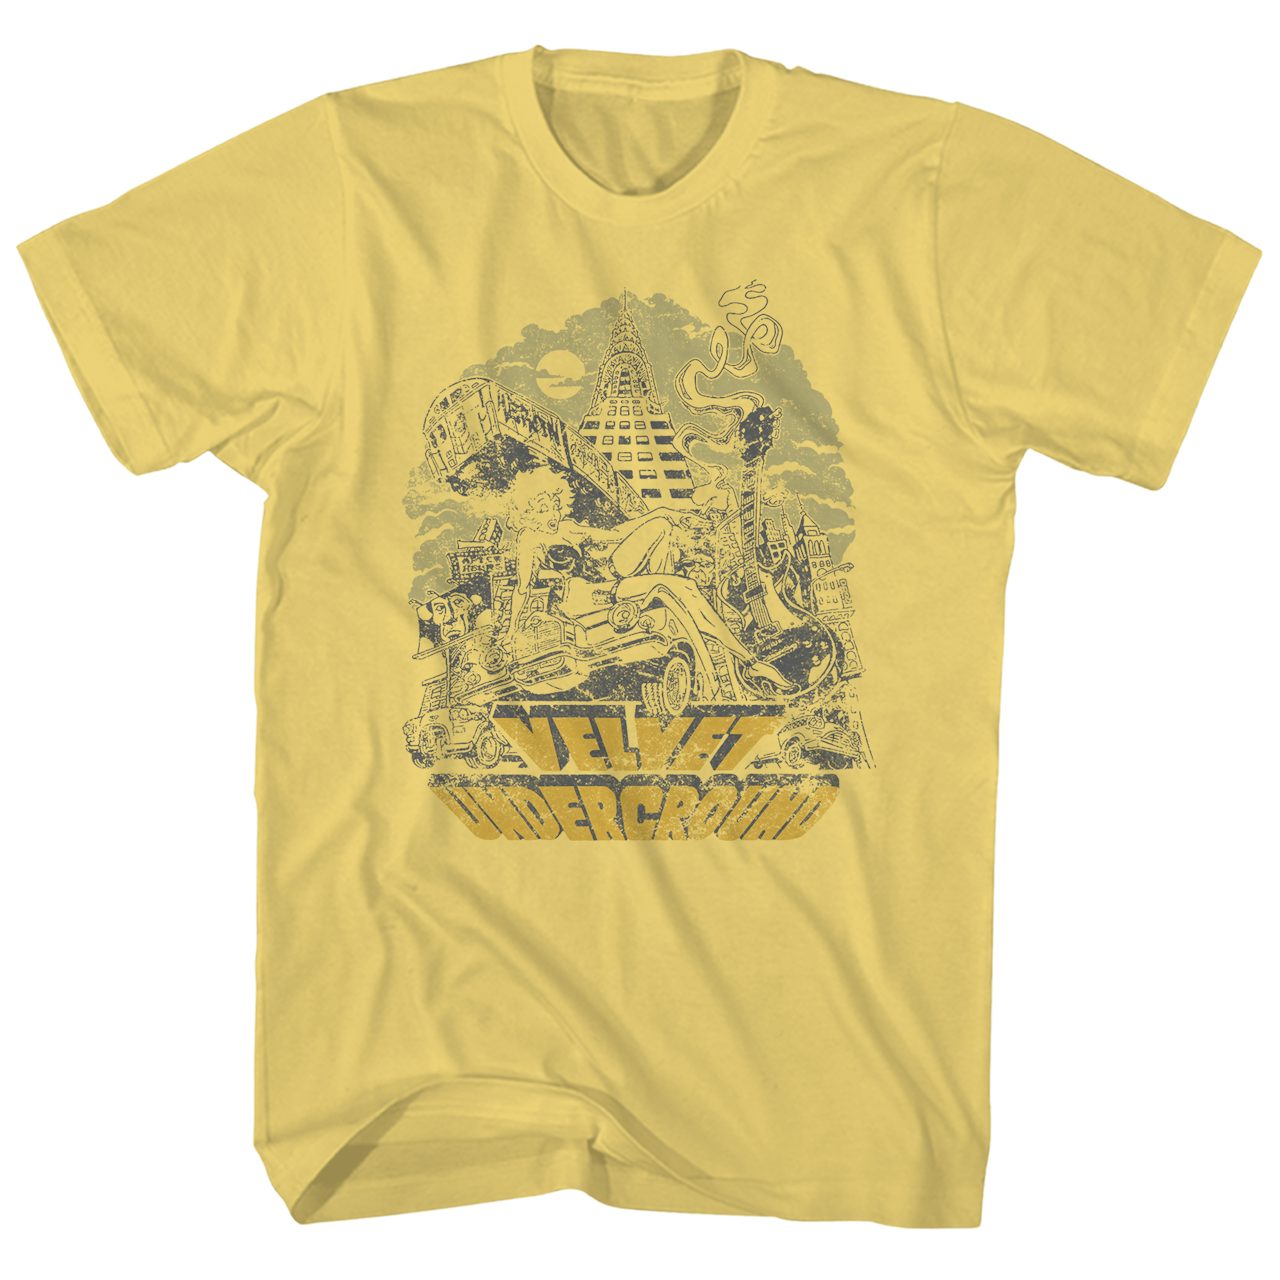 The Velvet Underground T-Shirt | NYC Art The Velvet Underground Shirt